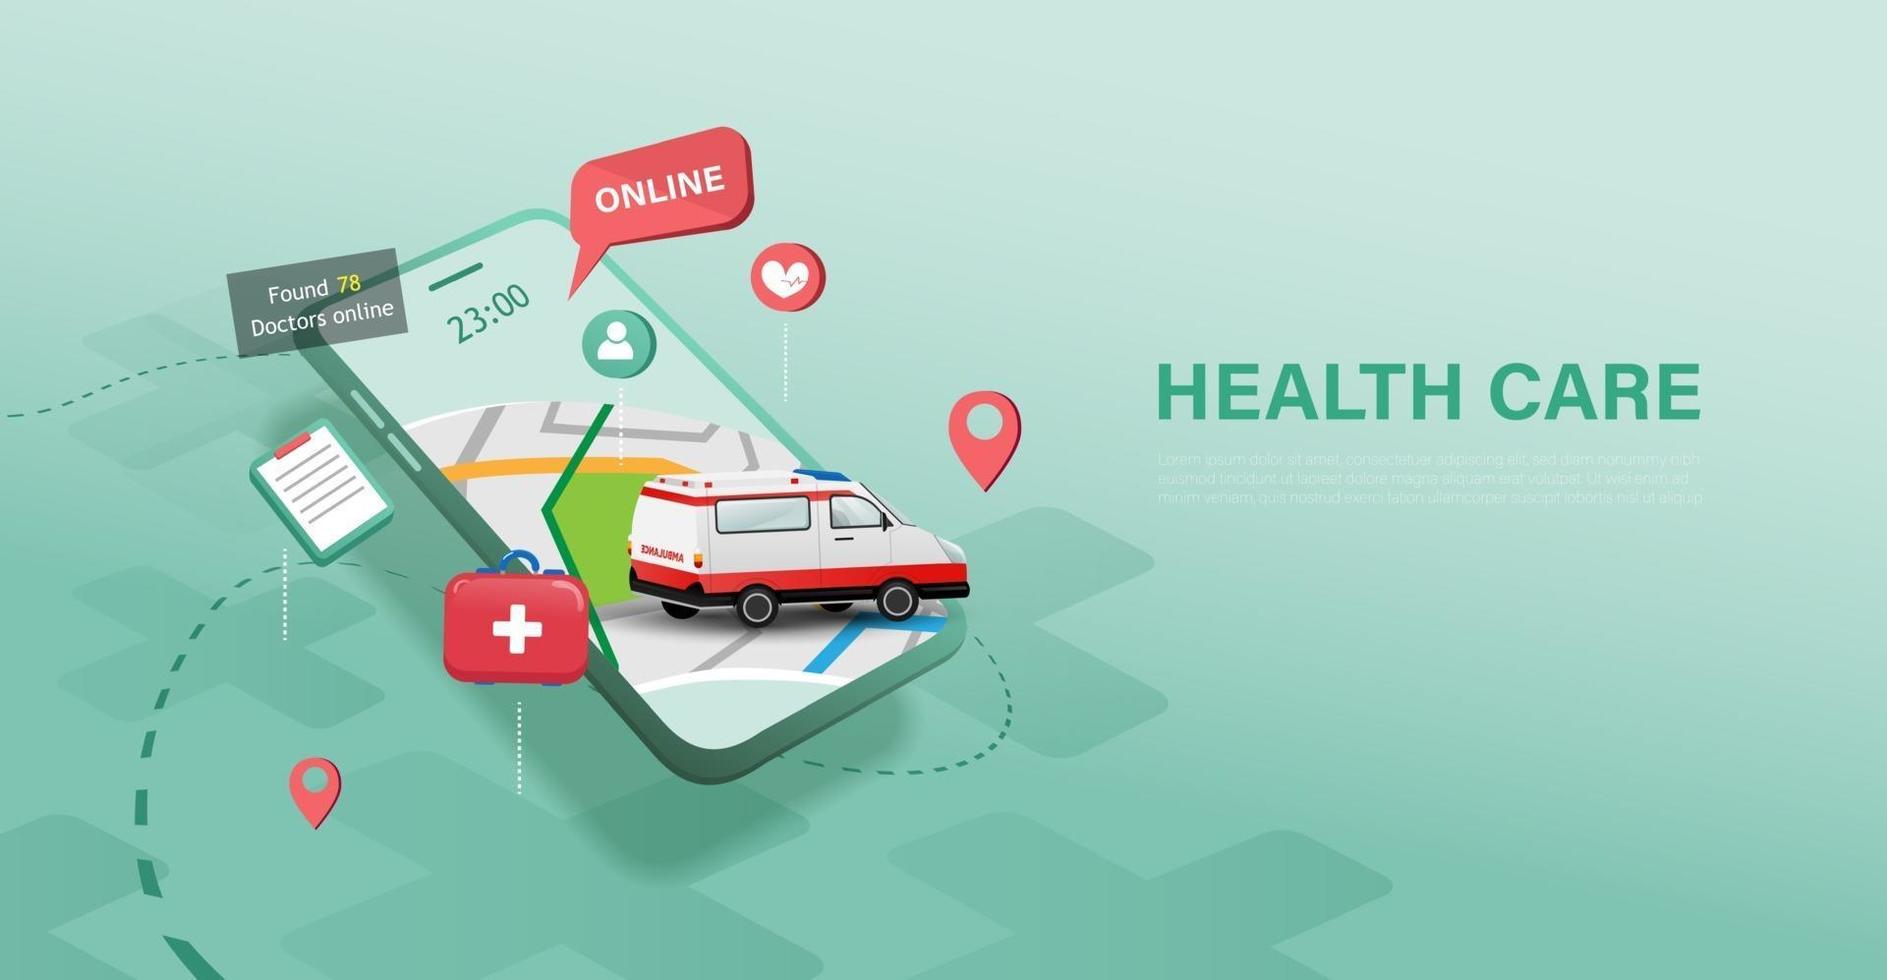 HealthVerse is a digital healthcare and technology media platform concept